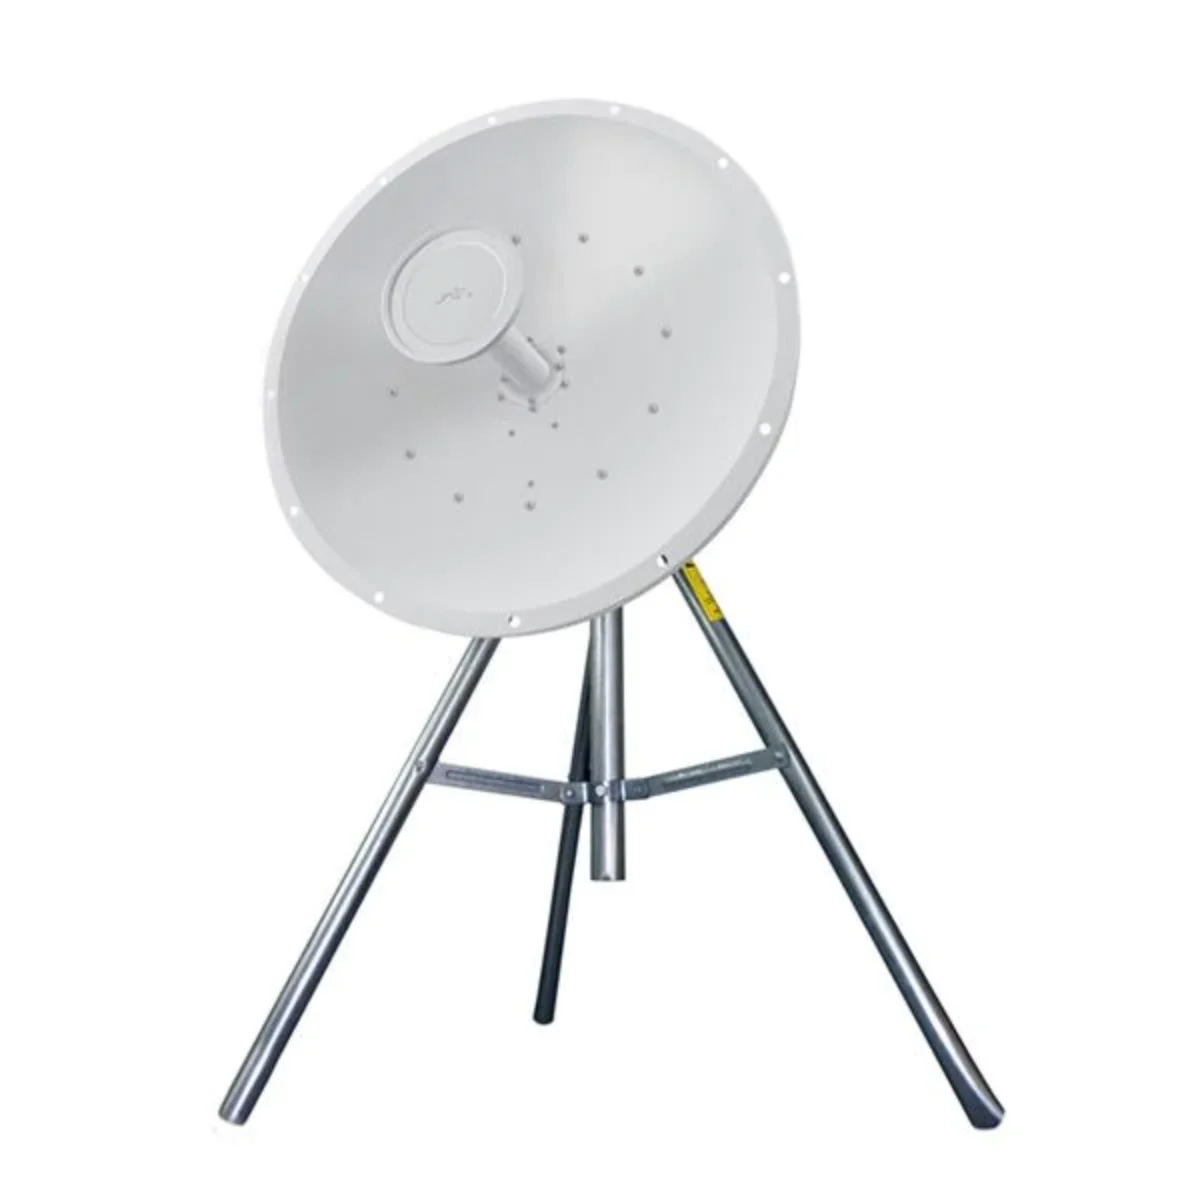 Ubiquiti RocketDish 5GHz Point-to-Point Dish Antenna – RD-5G34